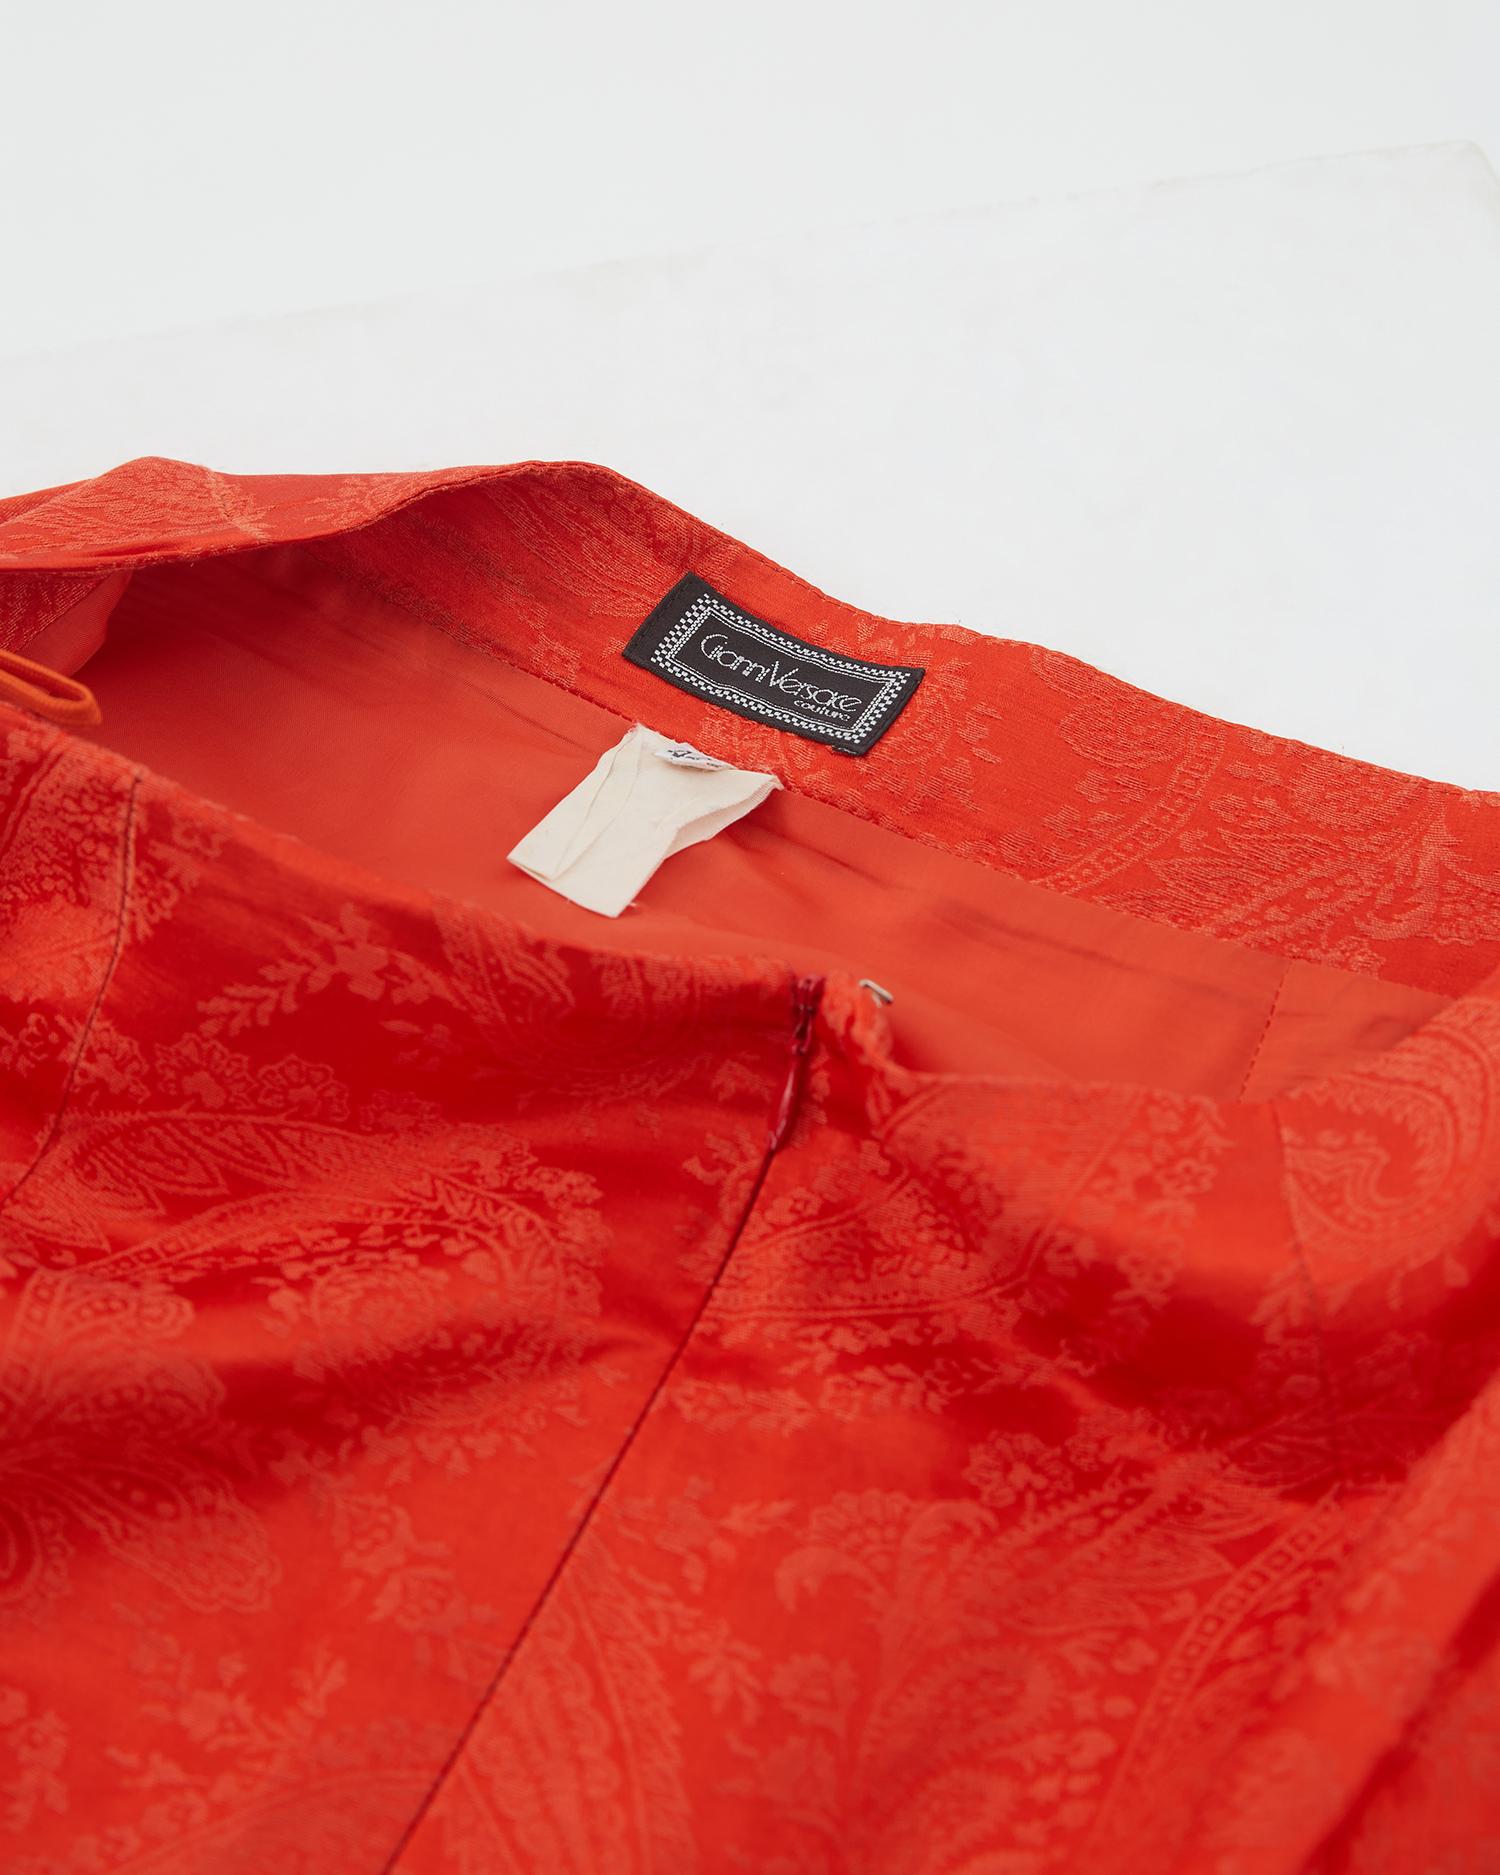 Gianni Versace S/S 1991 Orange silk paisley print blazer and skirt set For Sale 8